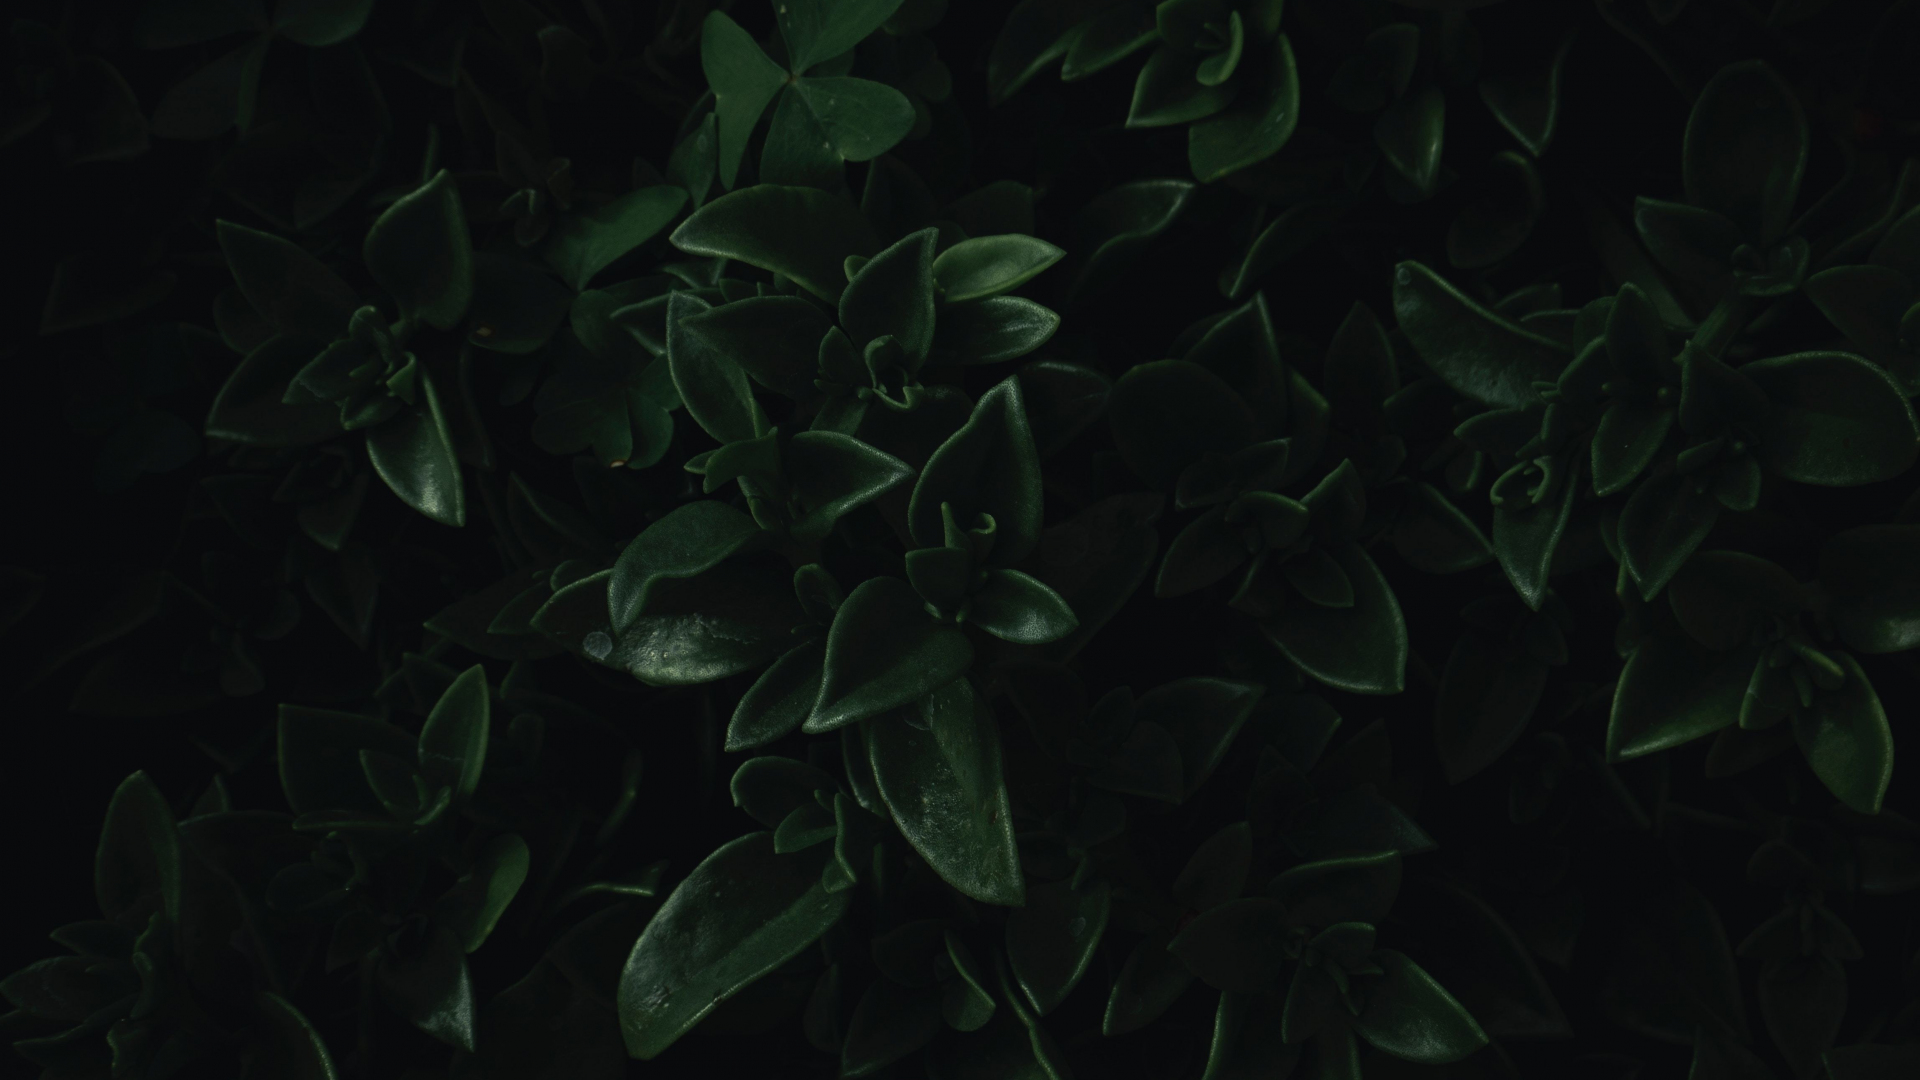 Download wallpaper 1920x1080 green leaves, close up, dark, portrait